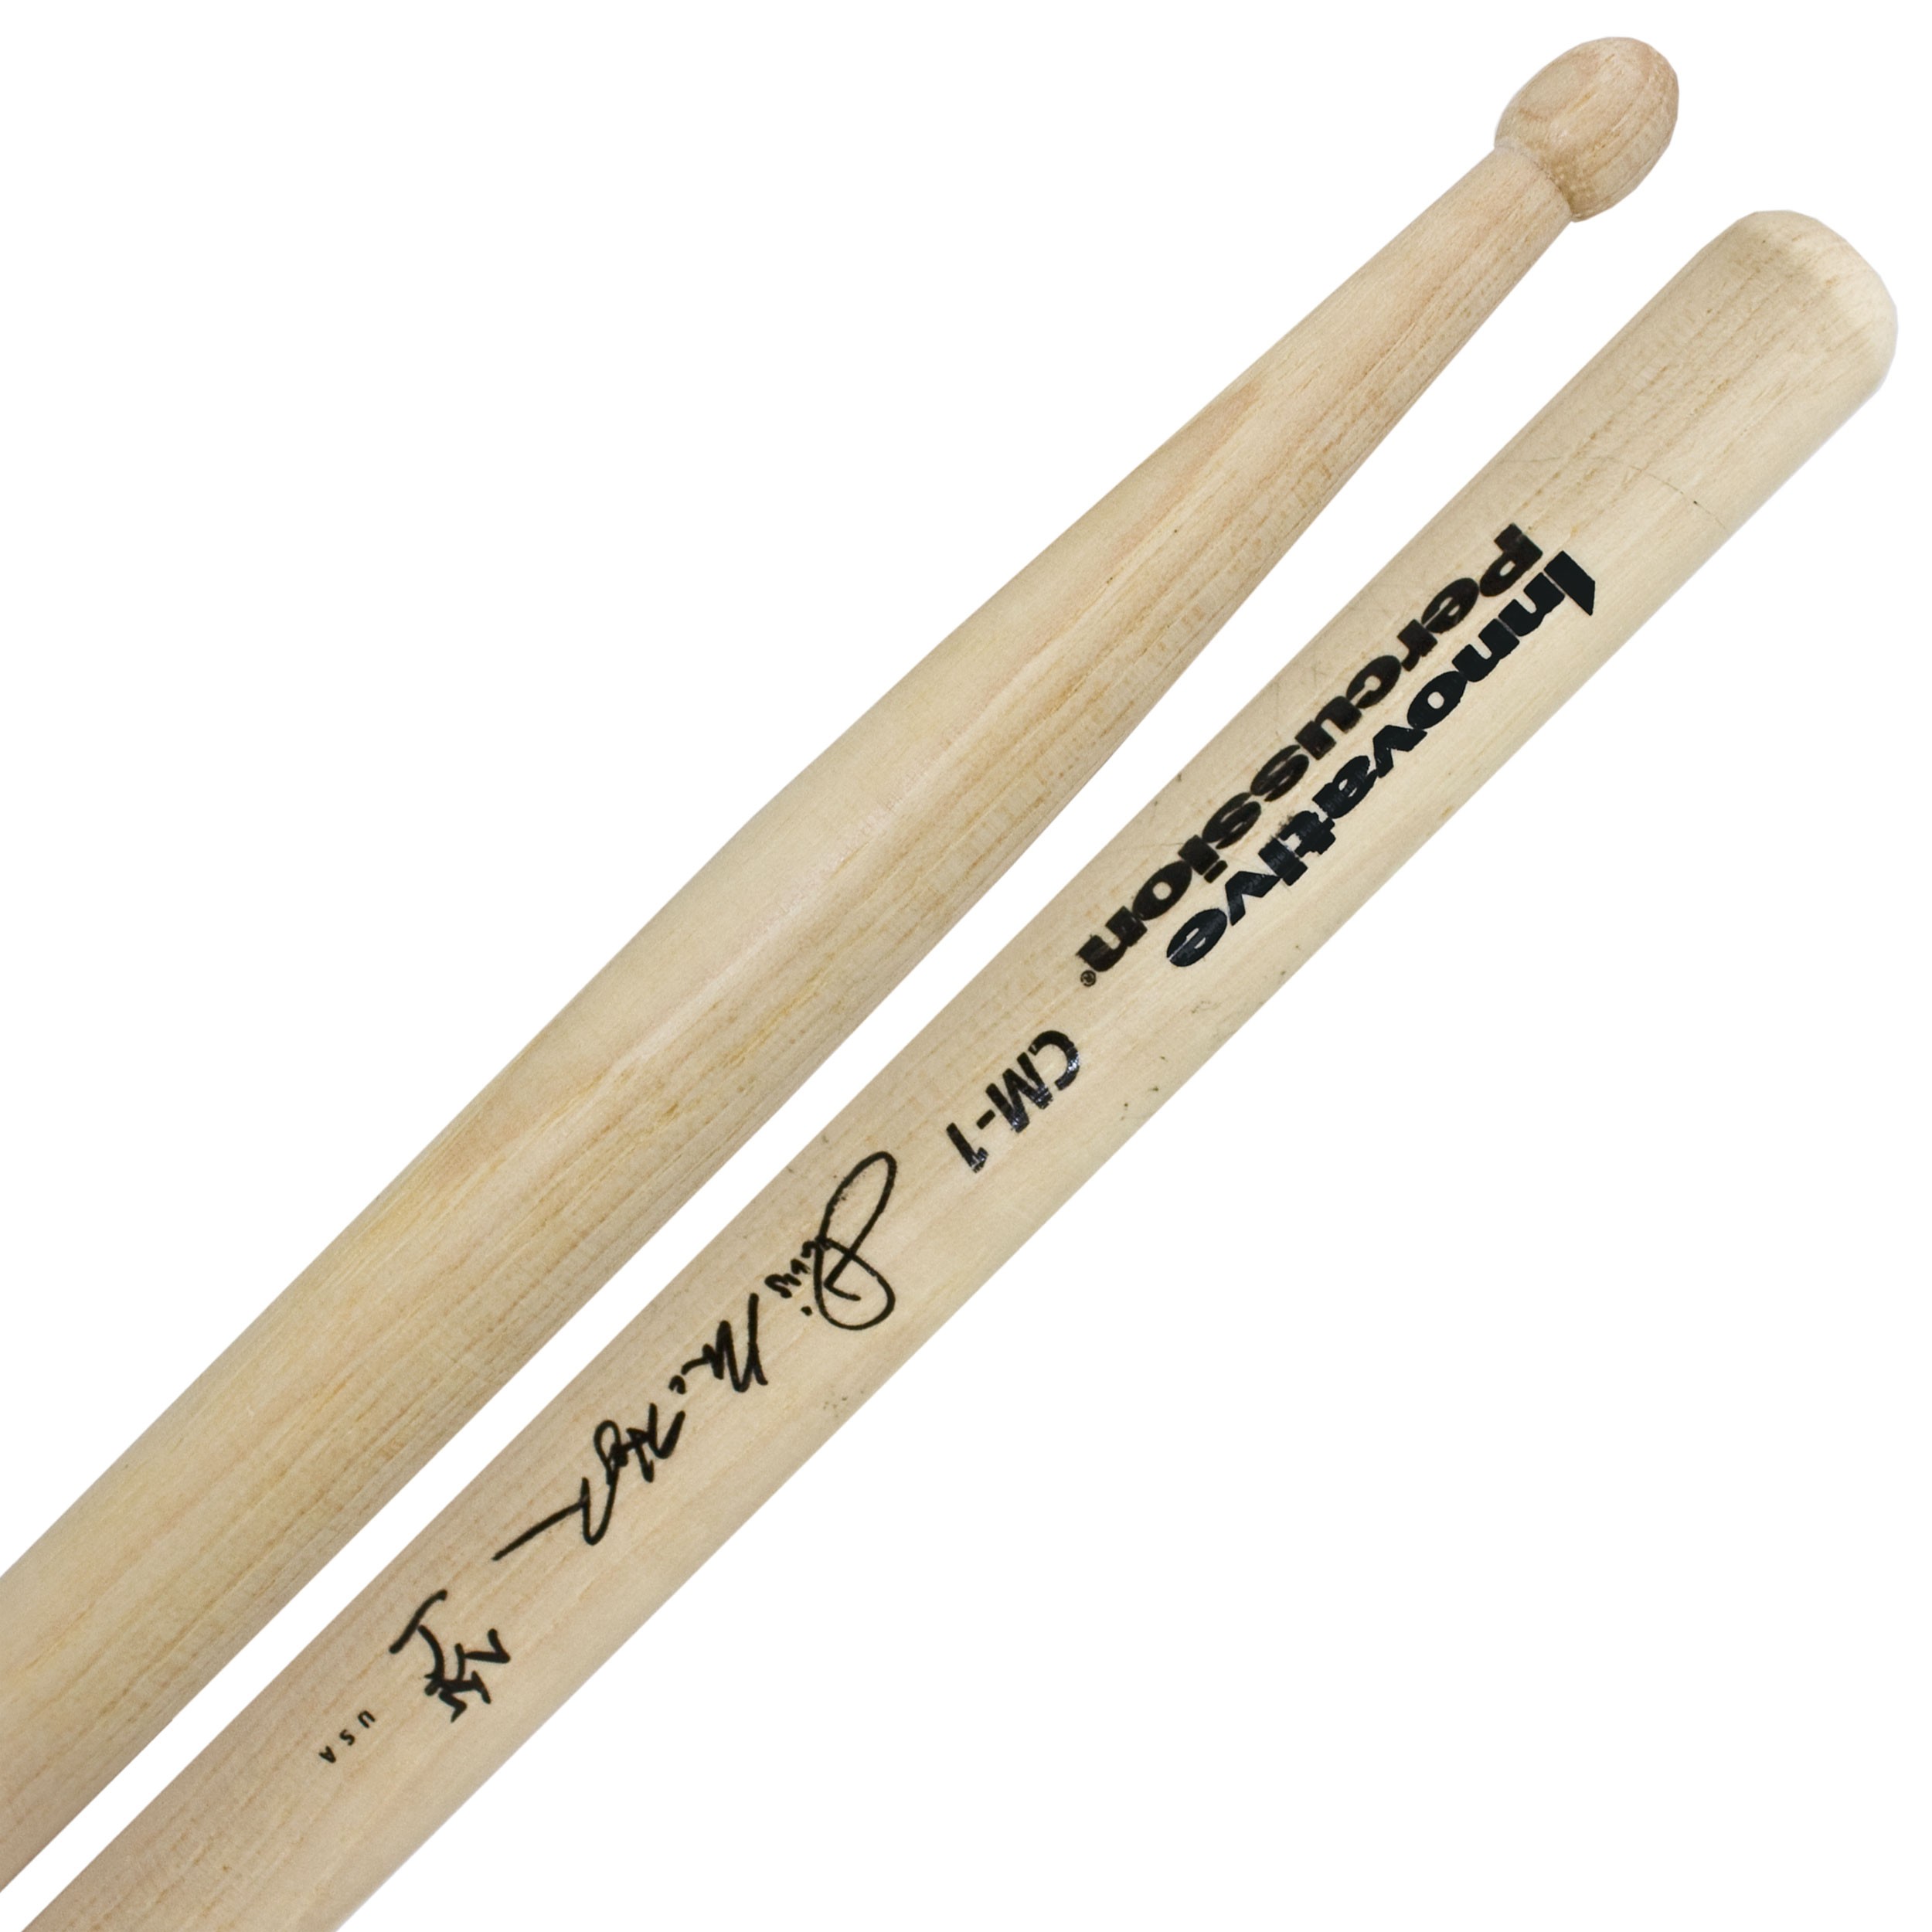 Innovative Percussion CM-1 Chris McHugh Signature Series Drumsticks